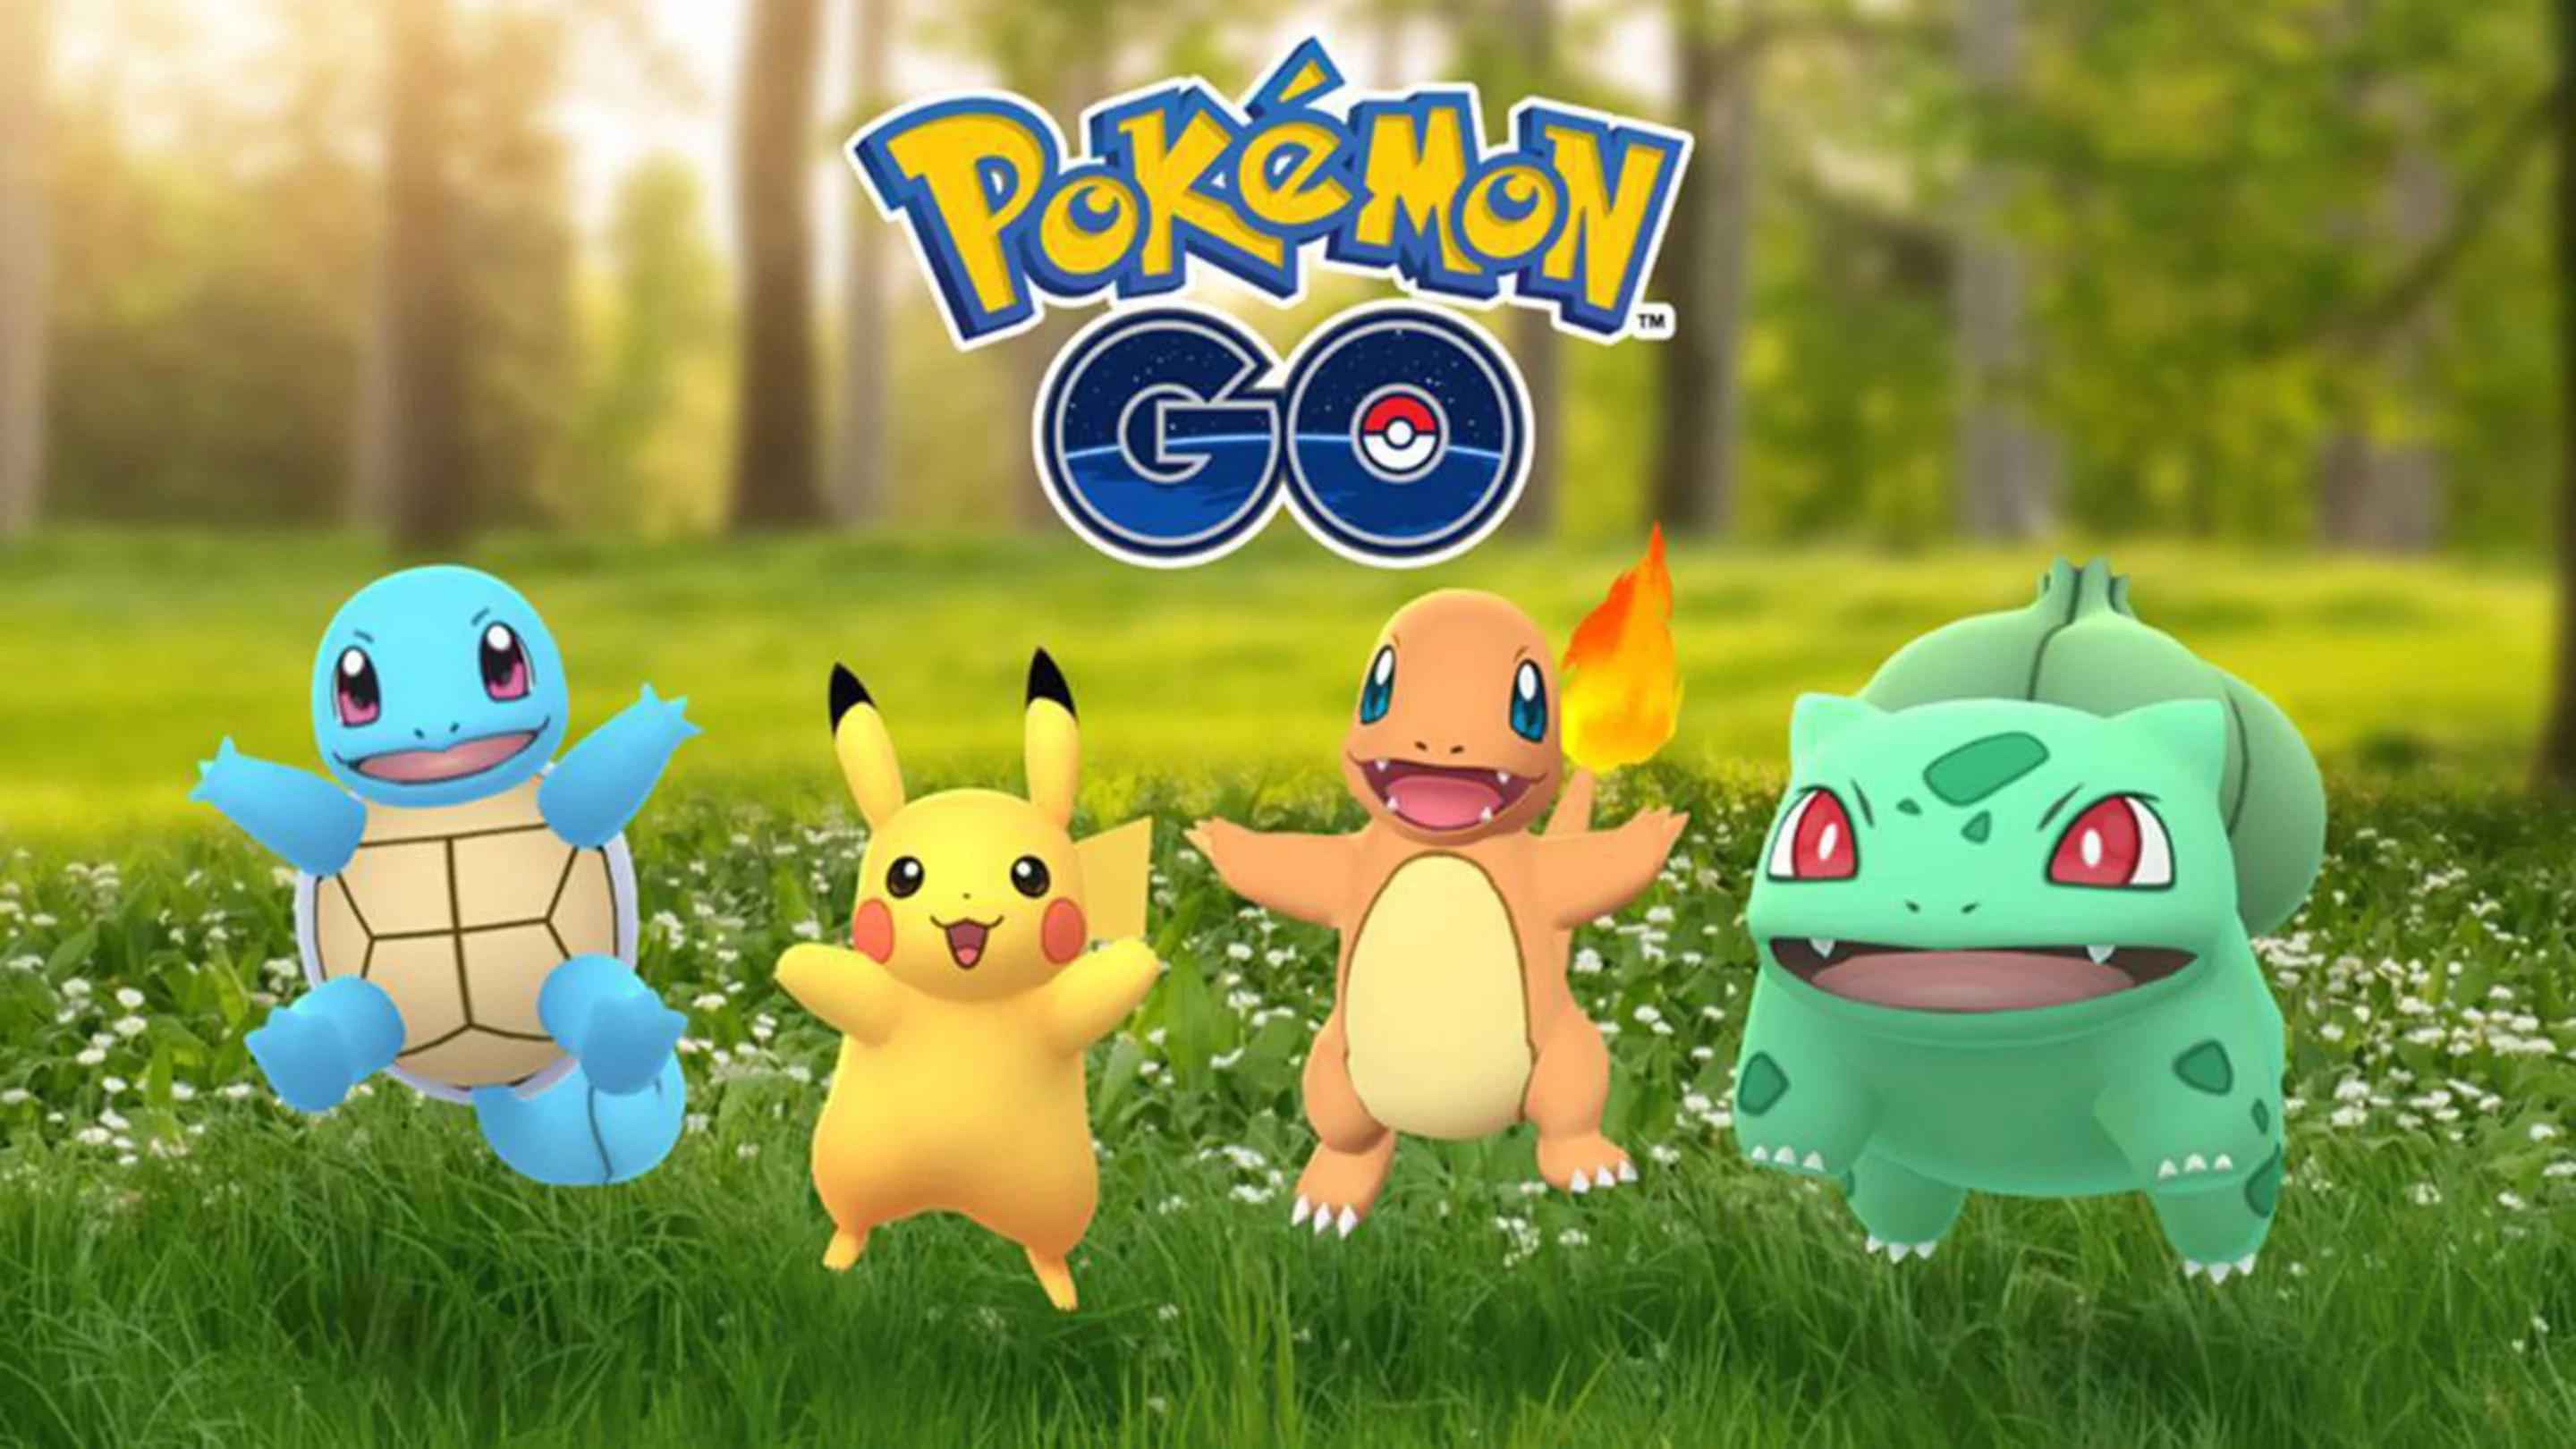 Promotional codes in Pokémon Go